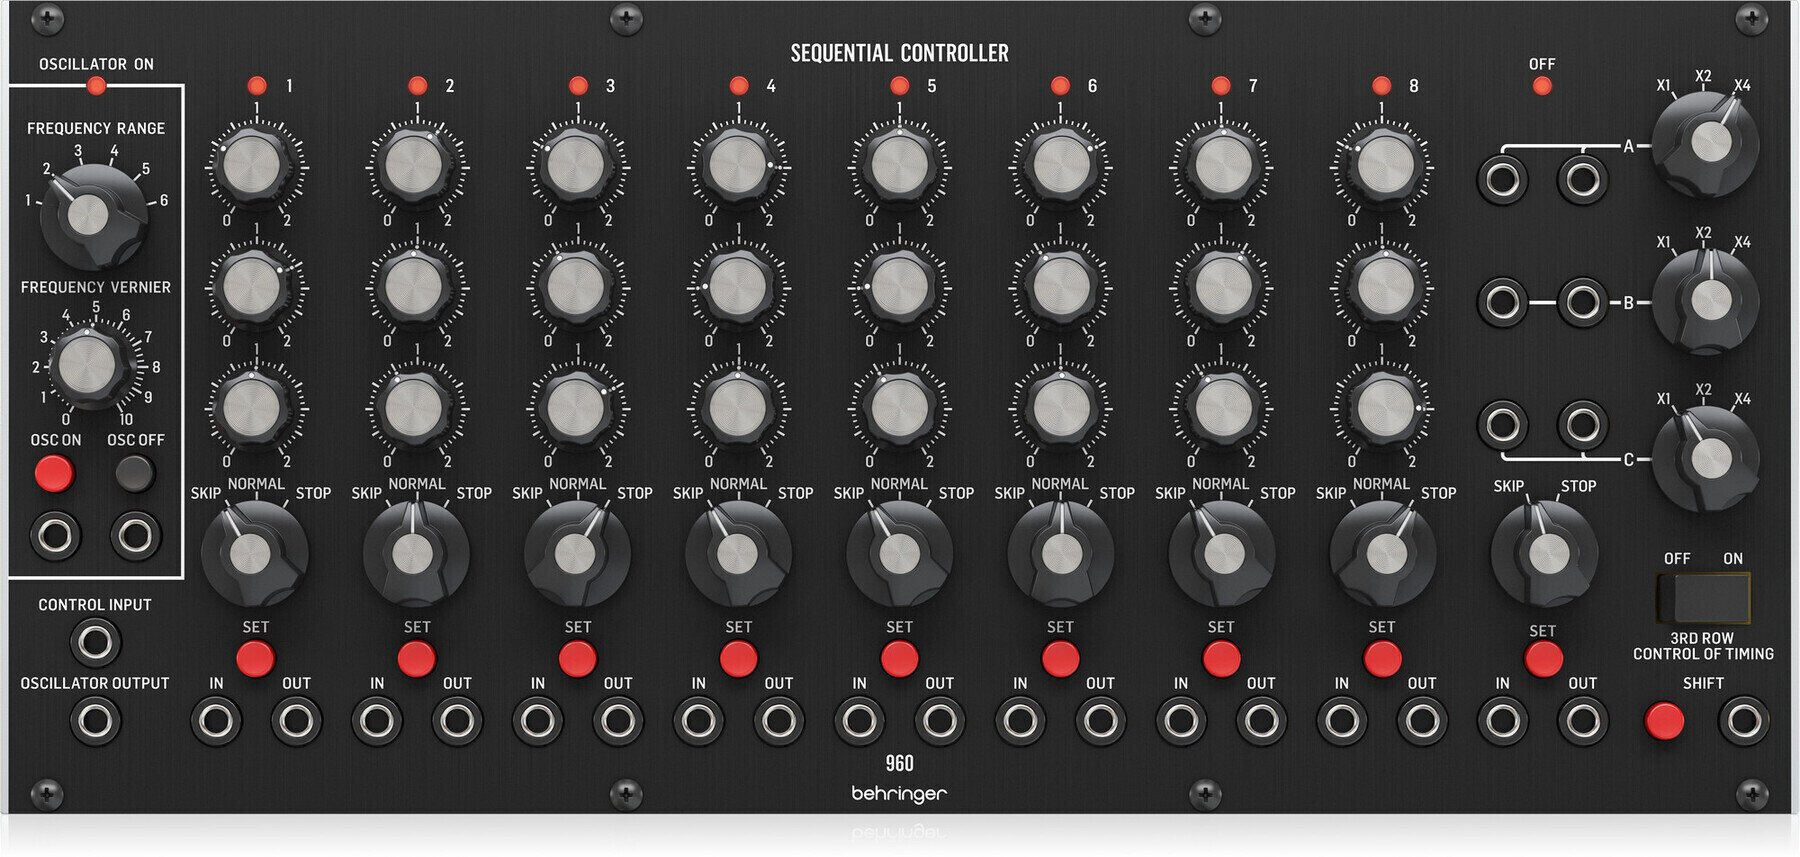 Modulární systém Behringer 960 Sequential Controller